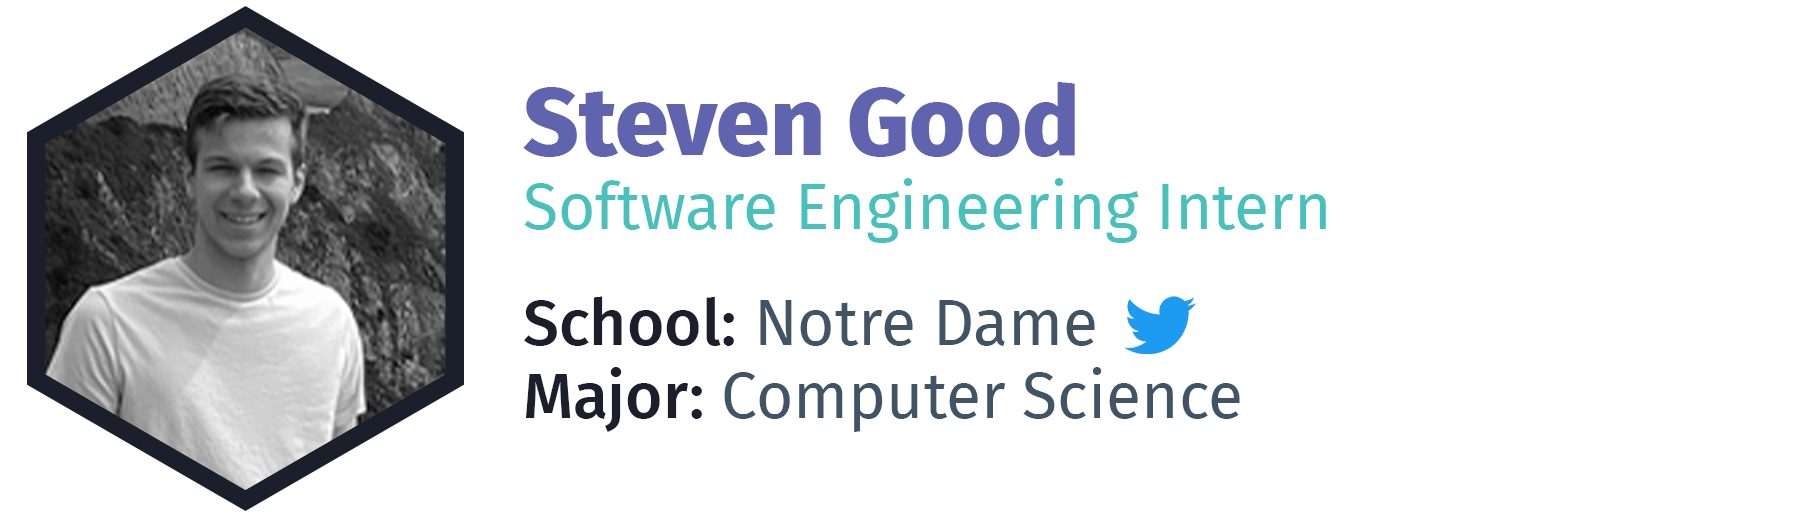 Steven Good - Software Engineering Intern